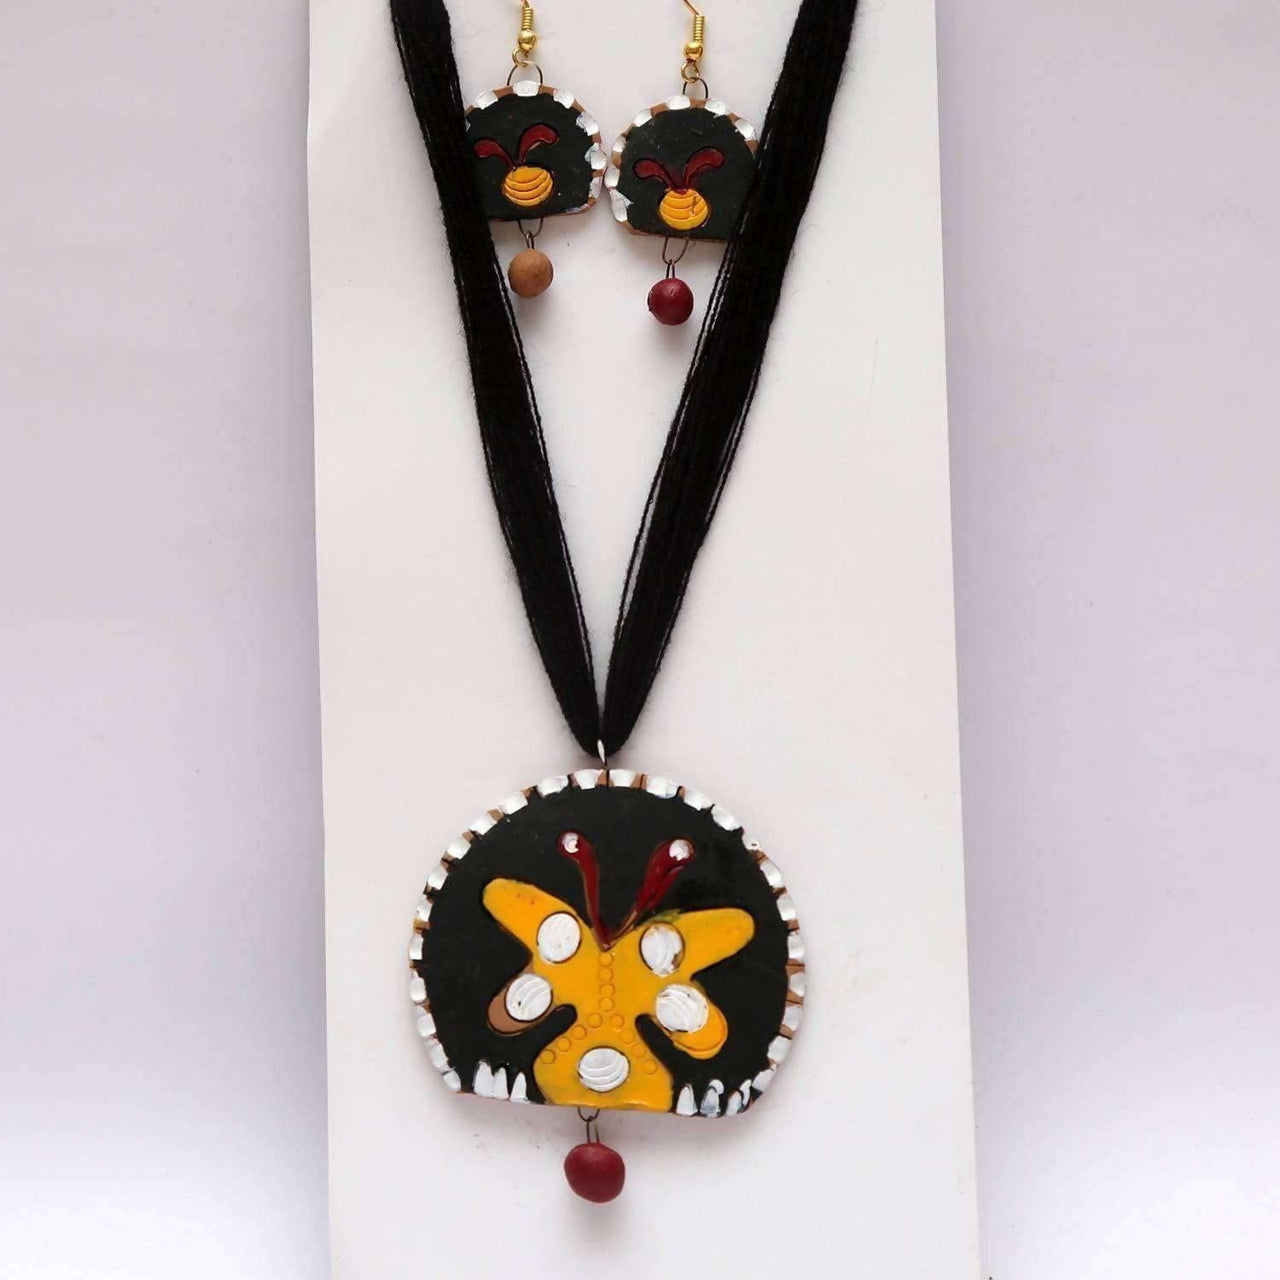 Terracotta Jewelry Butterfly Shaped Pendant with Earrings